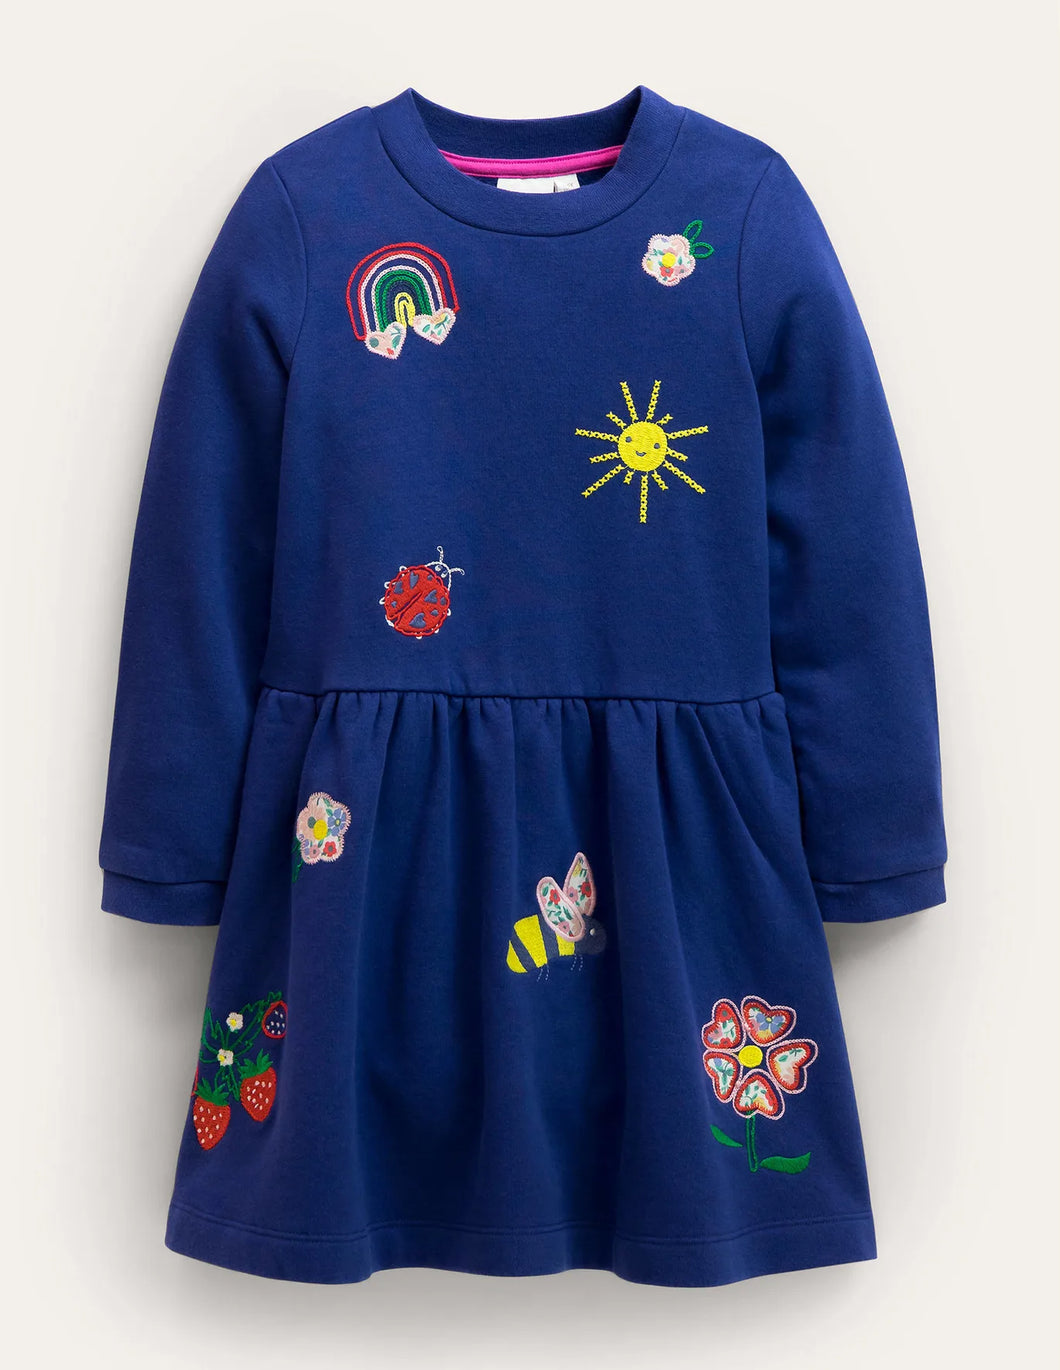 NWT Mini Boden Embroidered Sweatshirt Dress